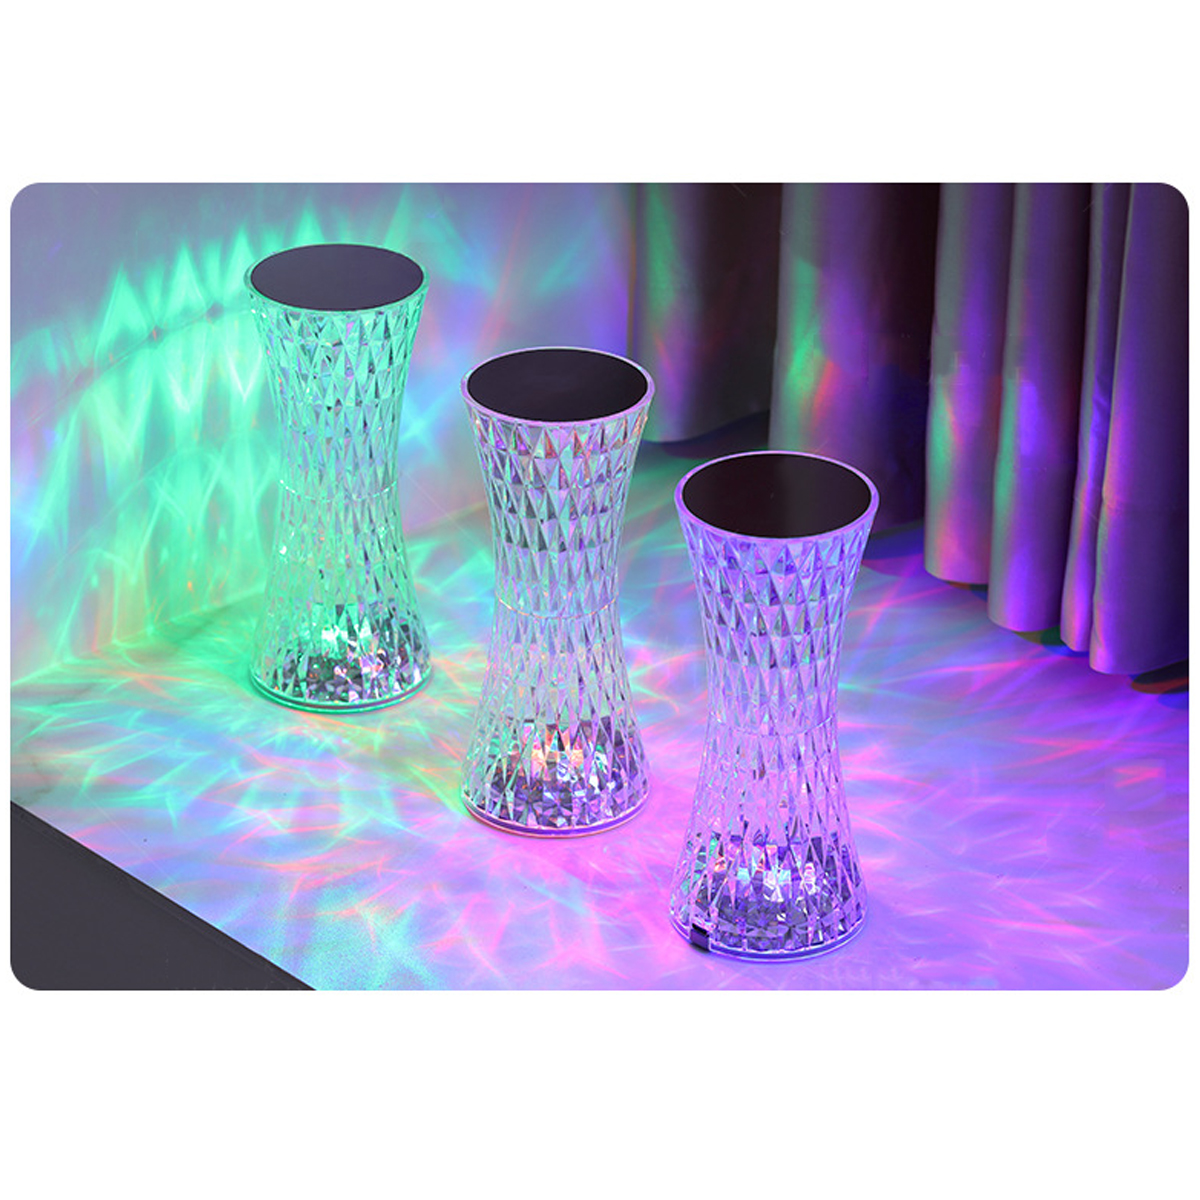 RGBWhite-Atmosphere-Light-Touch-Sensor-USB-Charging-Acrylic-Lamp-Bar-Light-Restaurant-Table-Lamps-Ro-1937232-9